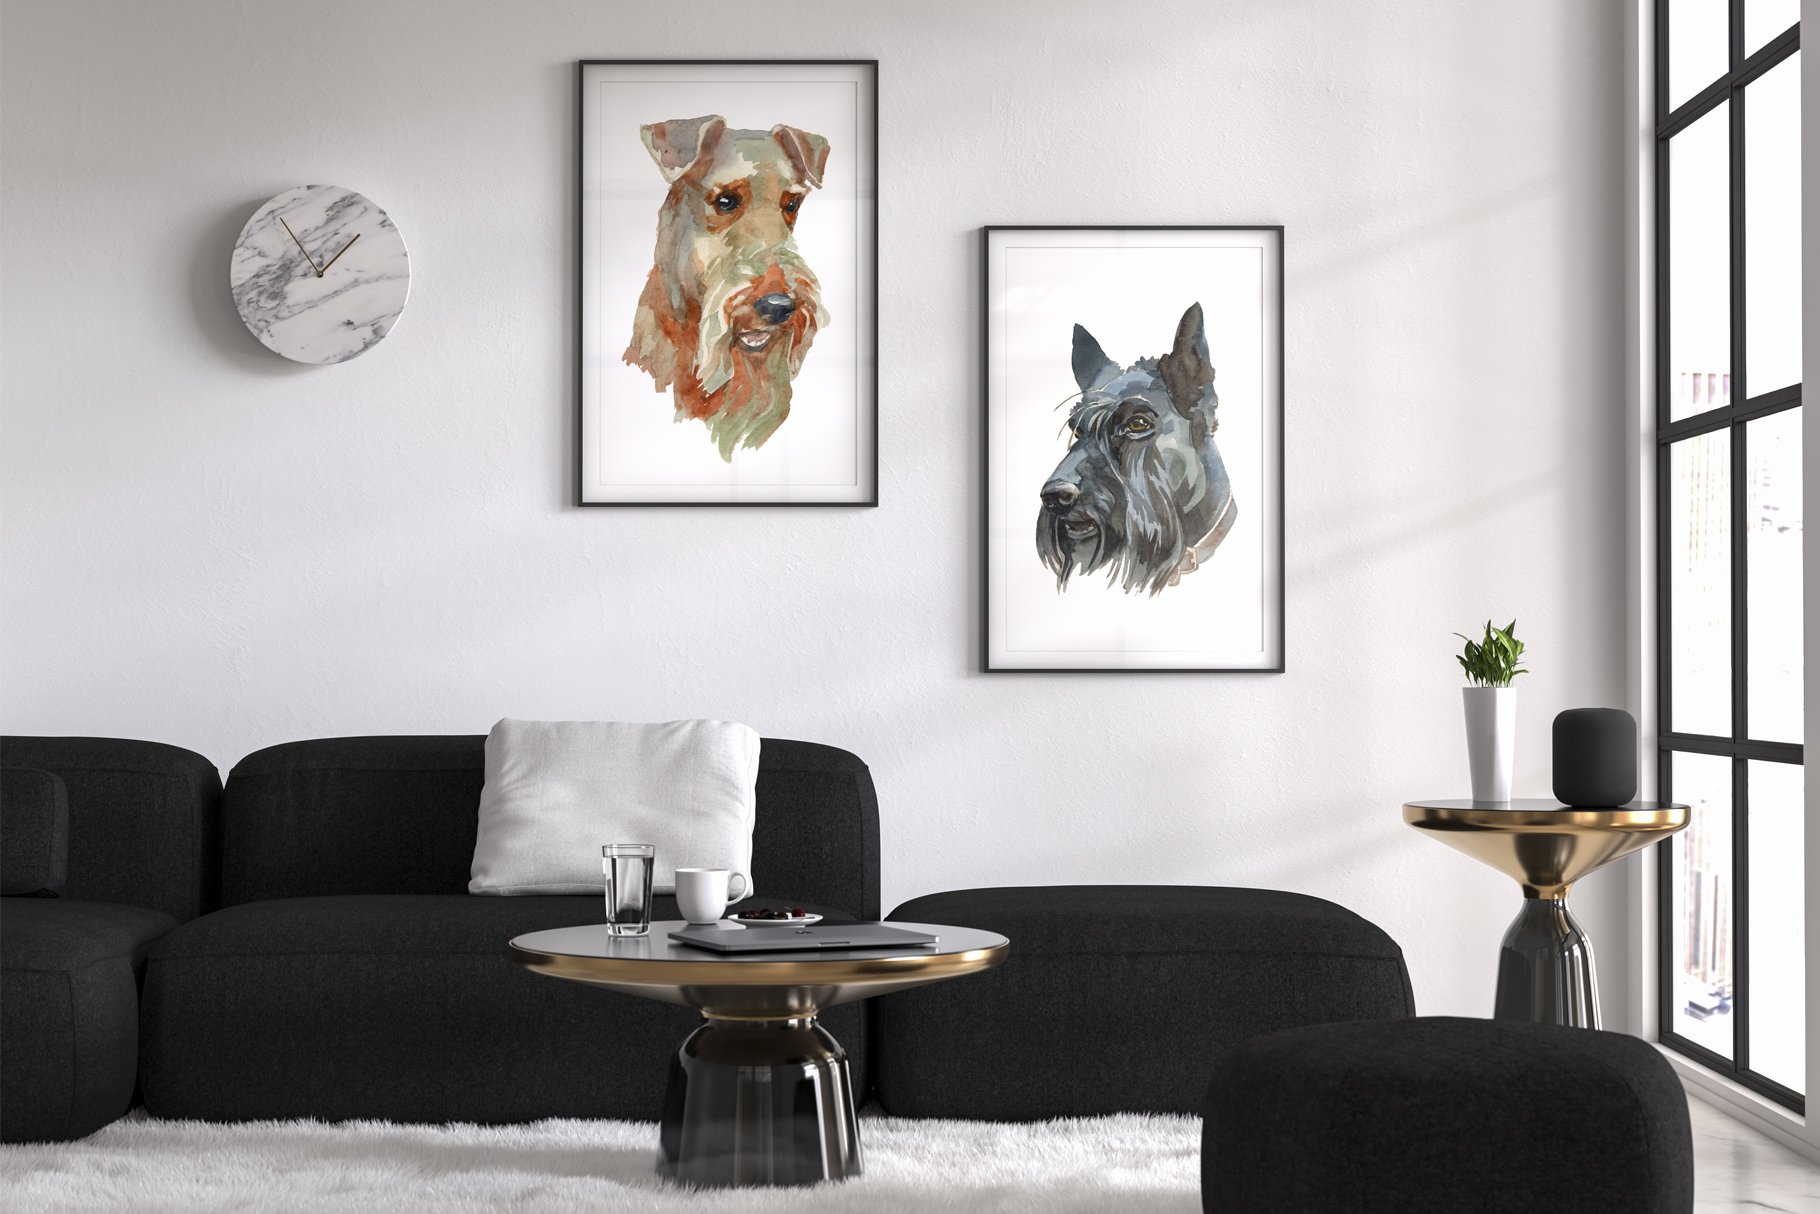 Terriers Watercolor Set.